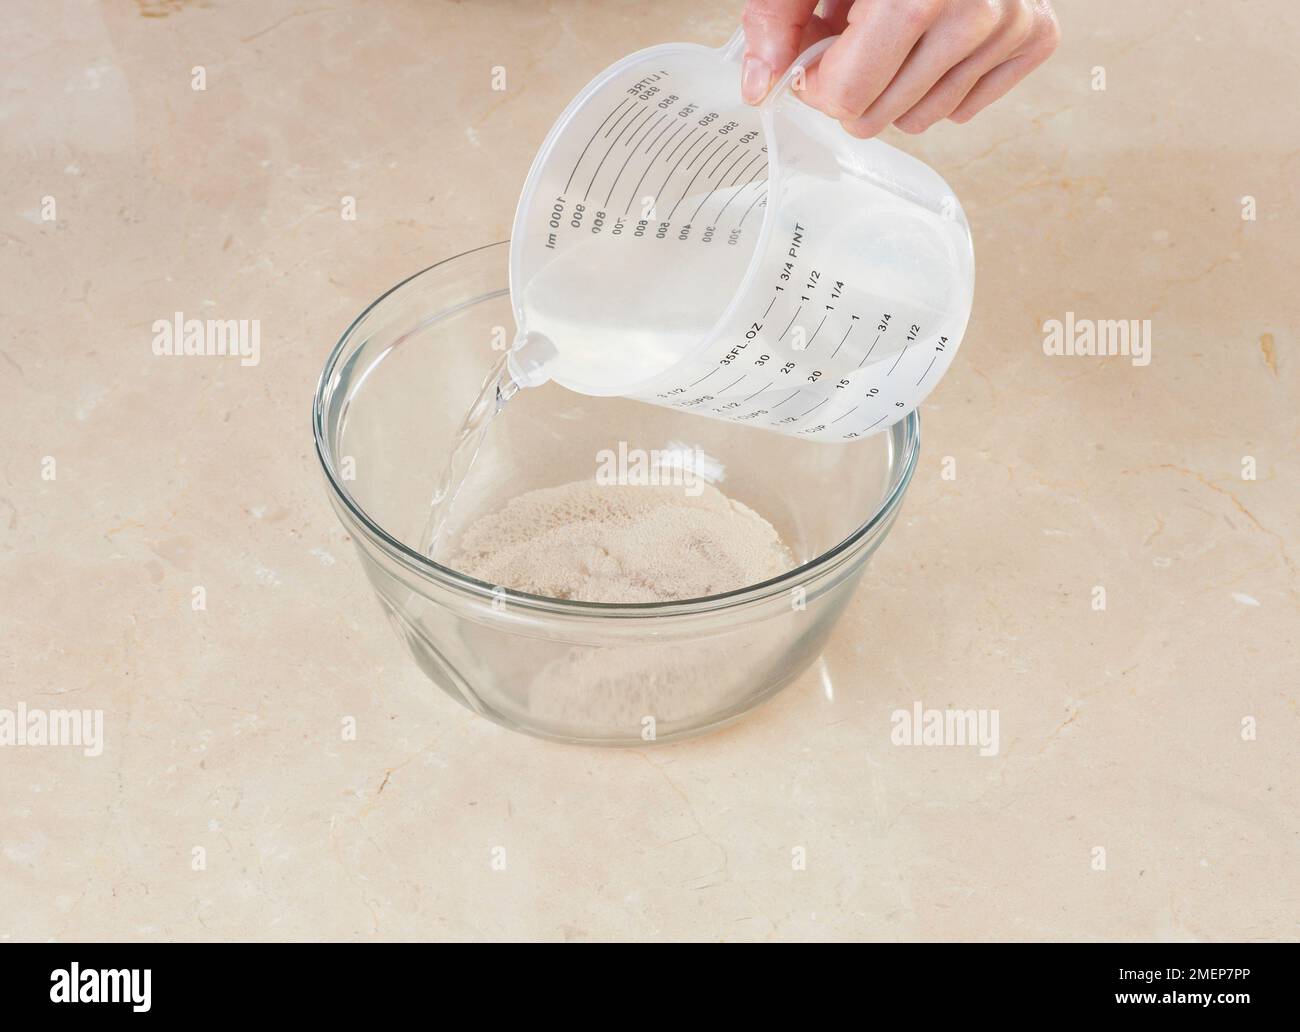 Making starter for sourdough bread, dissolving yeast in lukewarm water Stock Photo